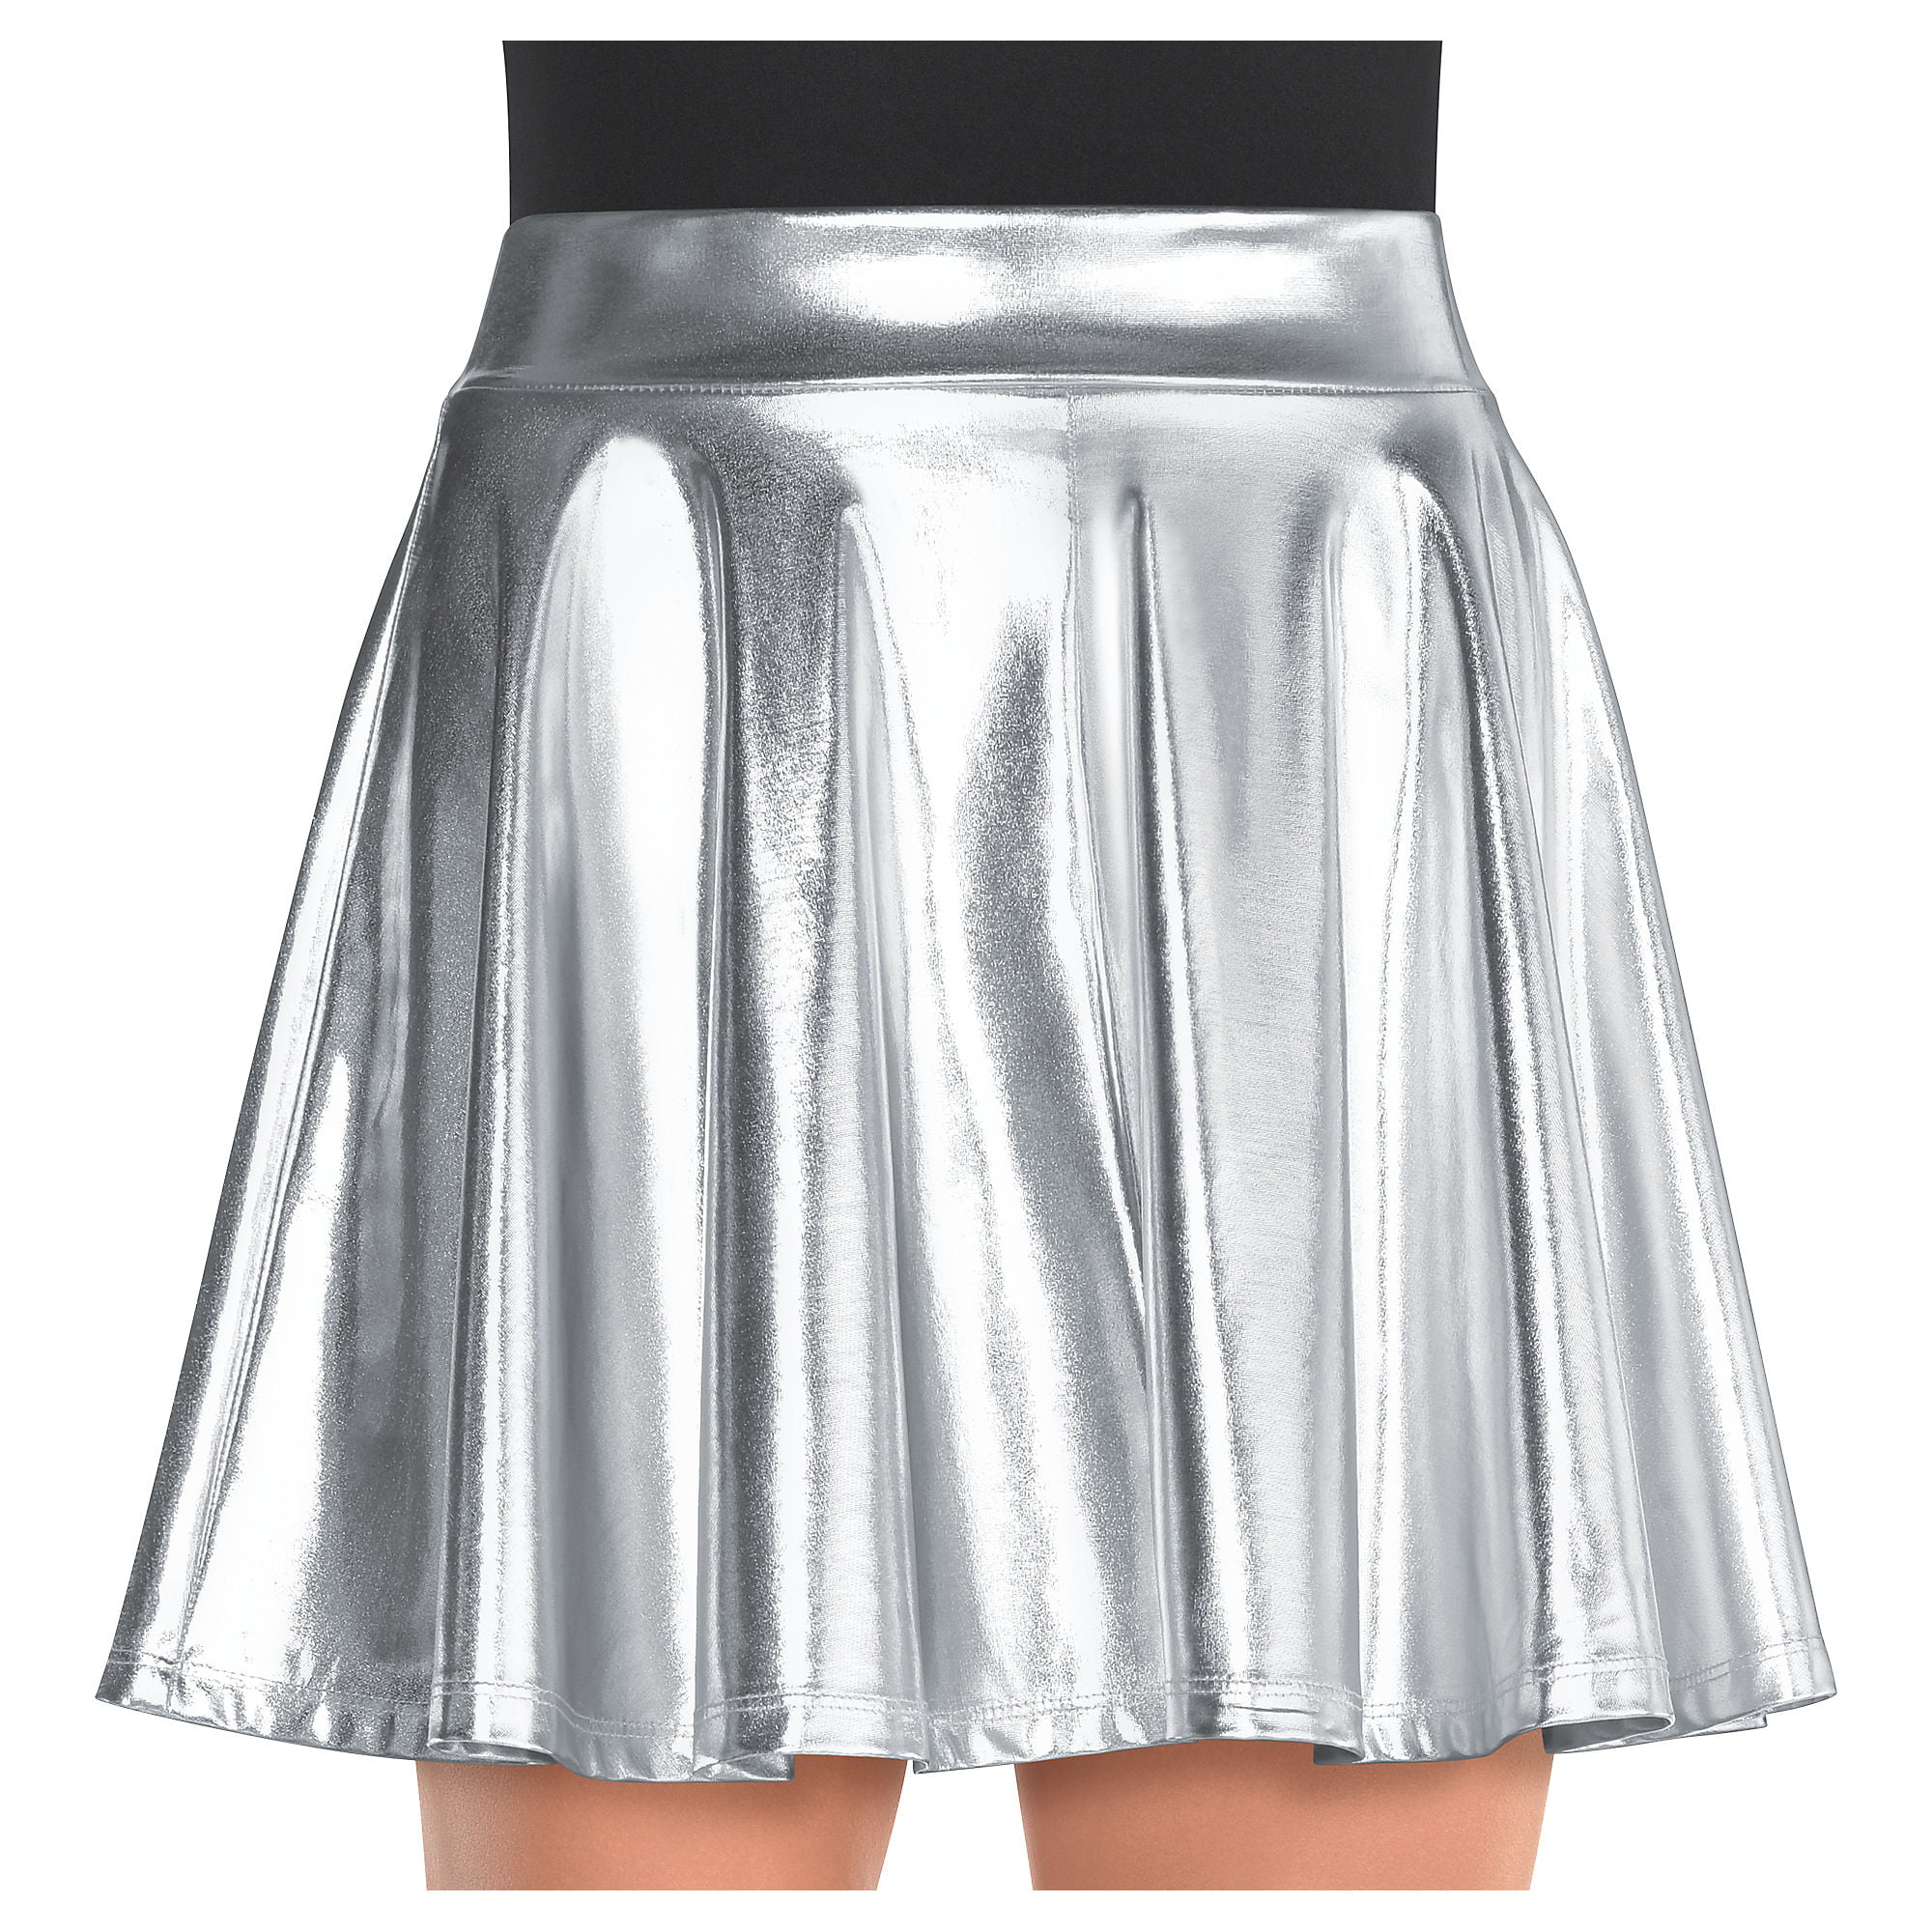 Amscan - Silver Flare Skirt for Women, Solid, Mini Skirt, Standard, by ...